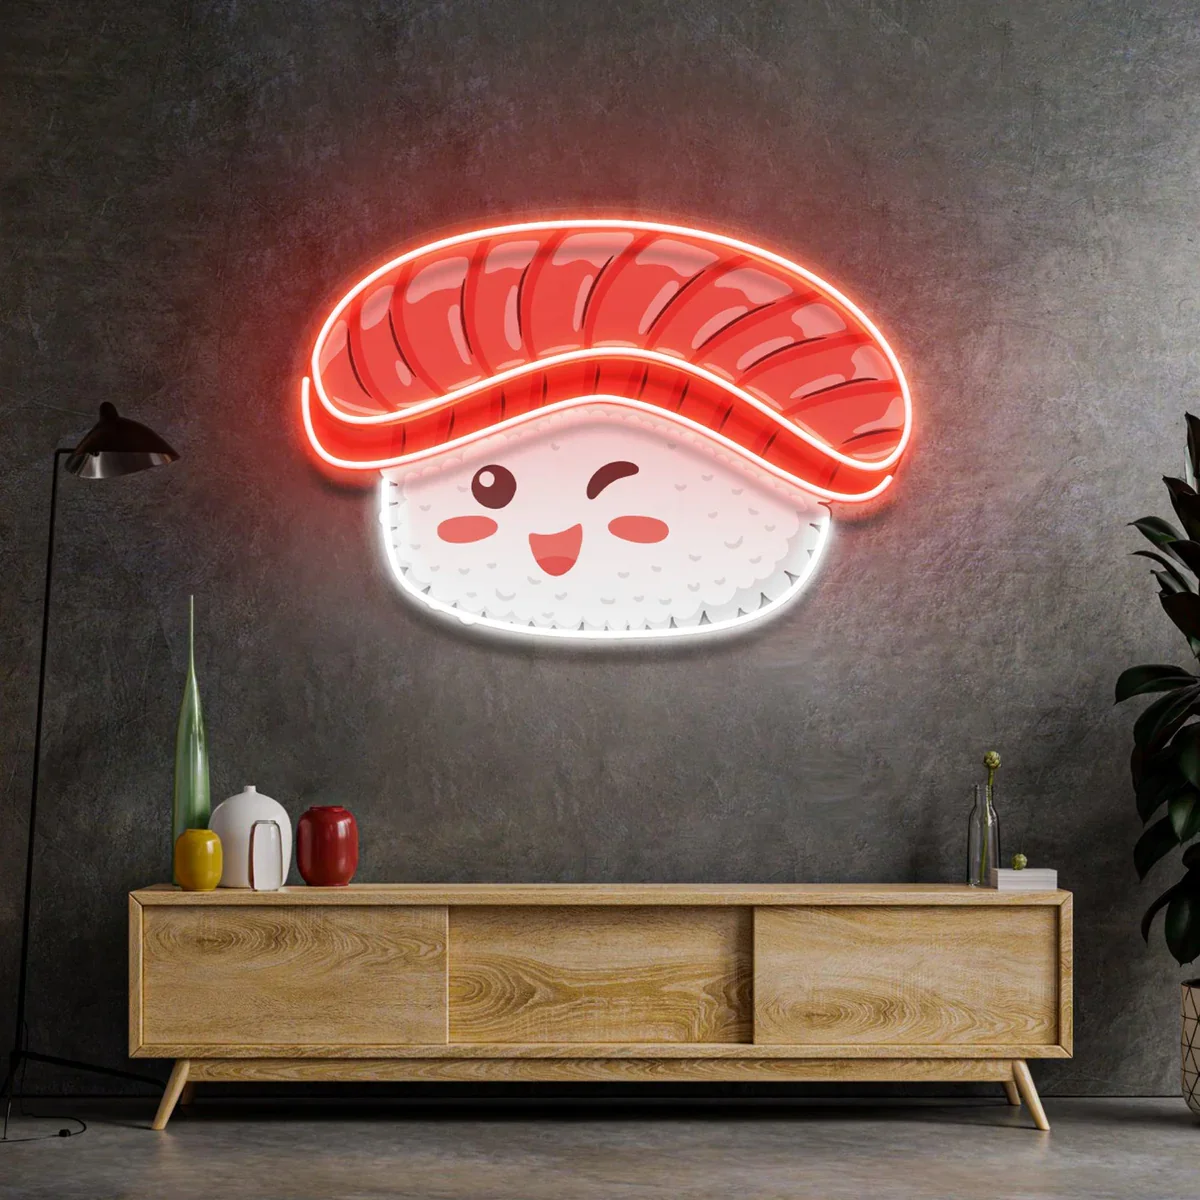 beef-sushi-neon-sign-acrylic-artwork-sign-home-decor-restaurant-decor